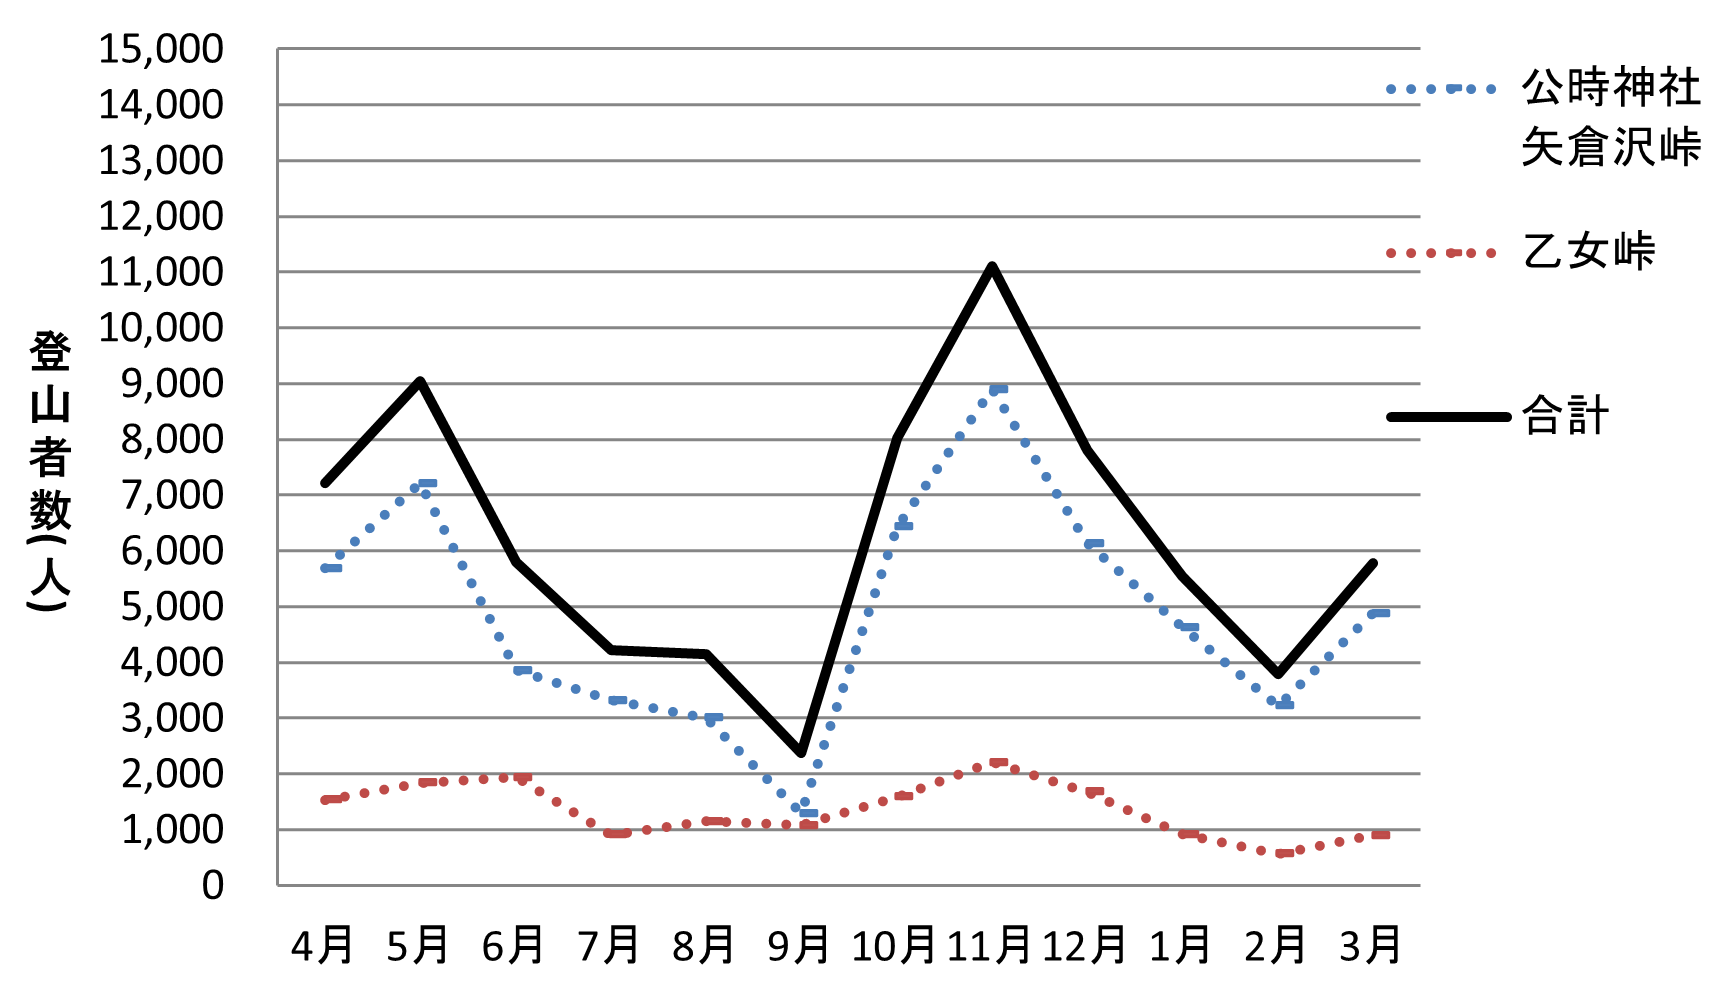 図２-１：令和３年度の月別・各登山者数の推移（計測値）